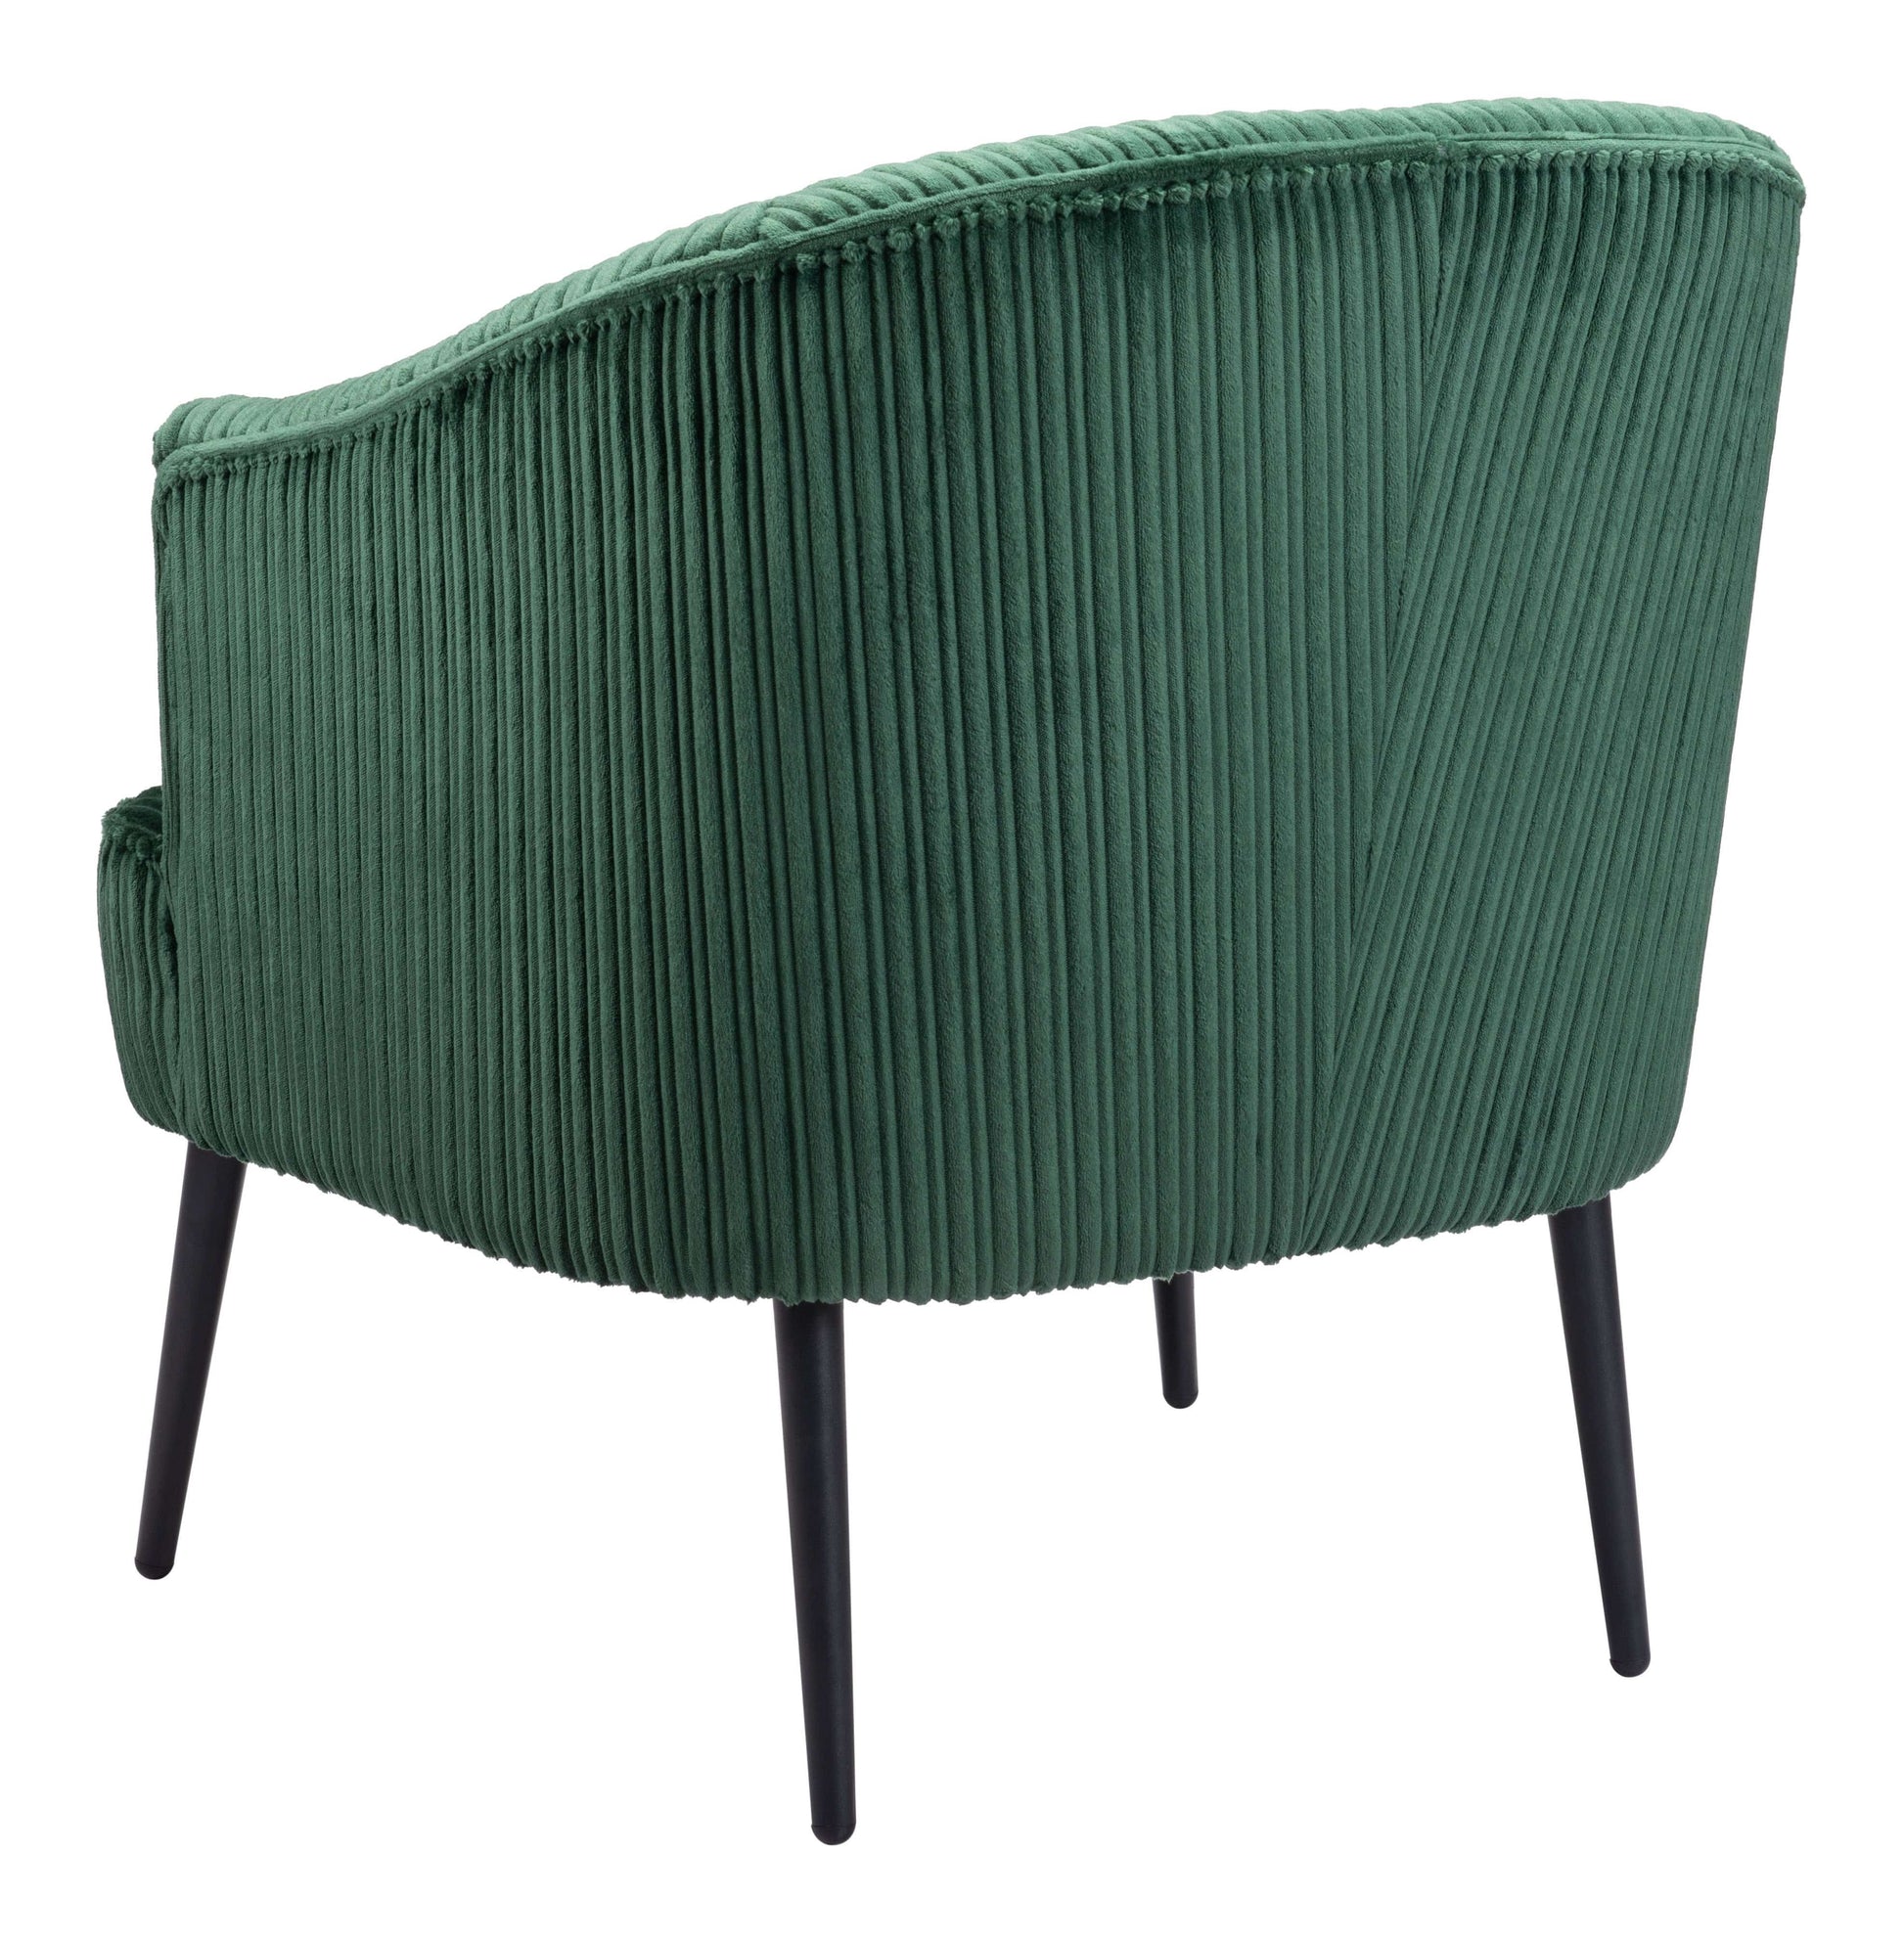 Ranier Accent Chair Green - Elite Maison